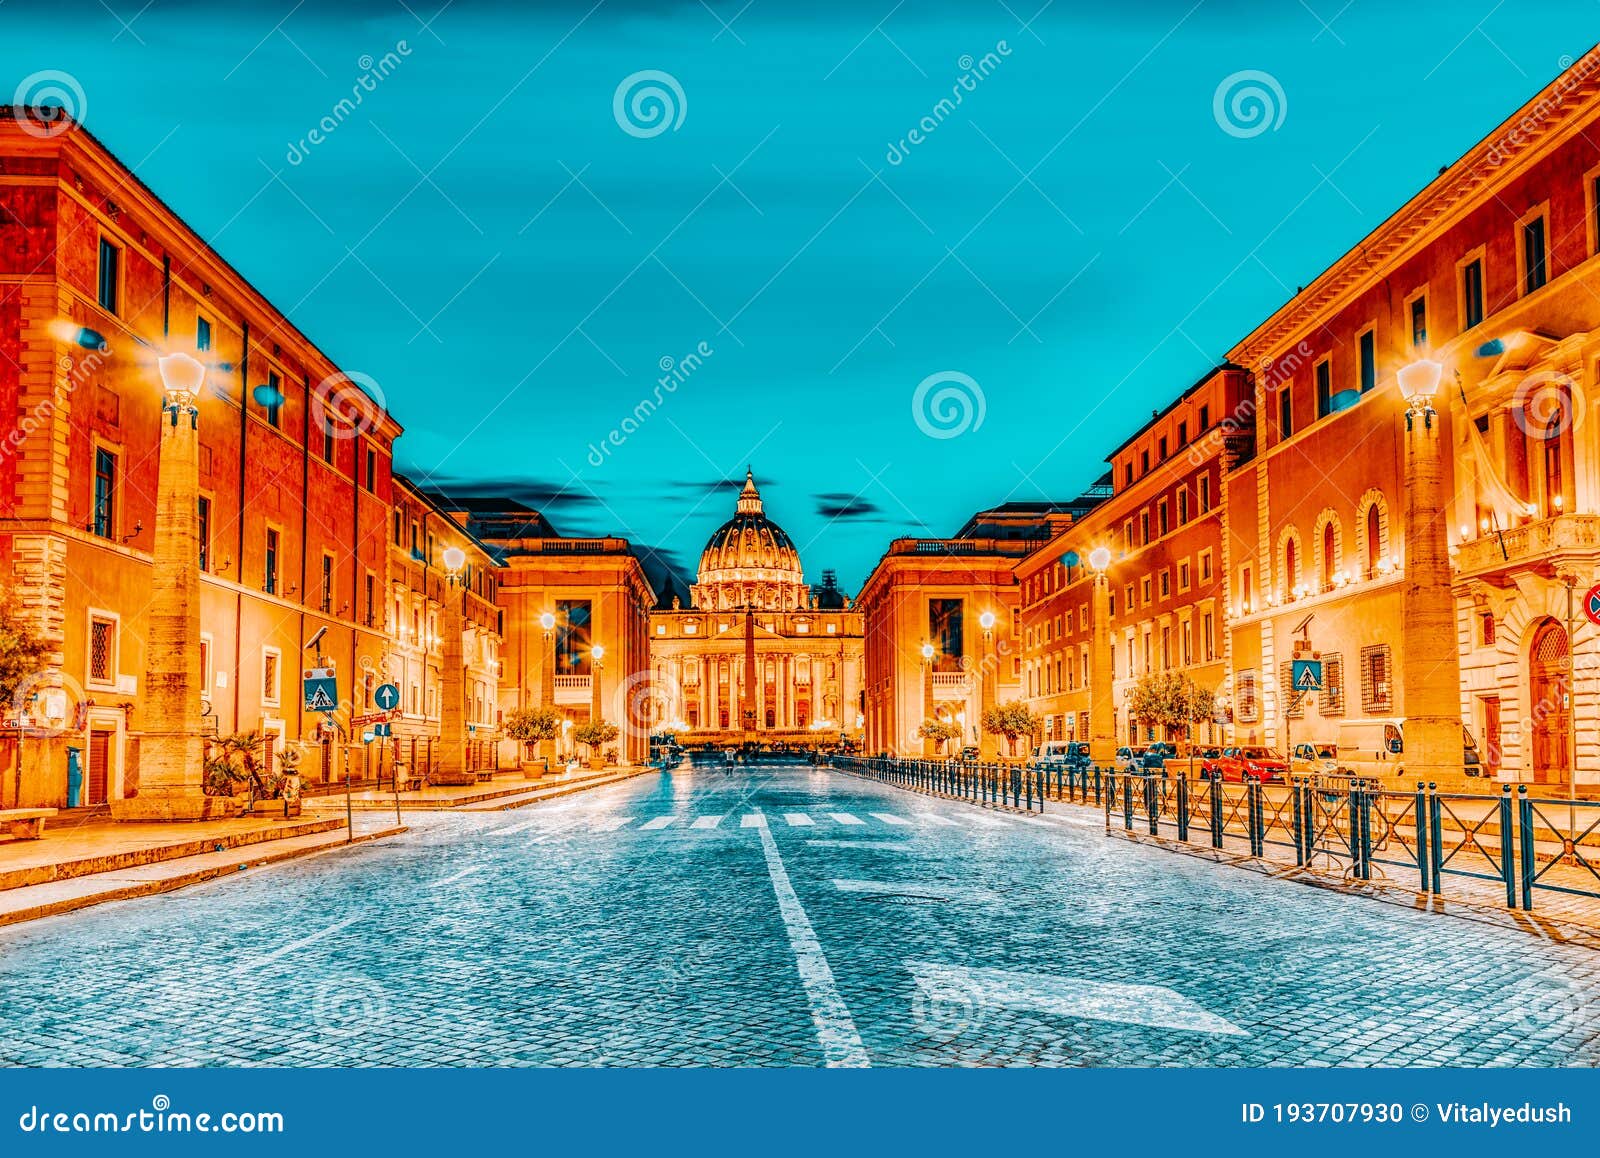 st. peter`s square and st. peter`s basilica, vatican city in the evening time from street conciliazione via della conciliazione